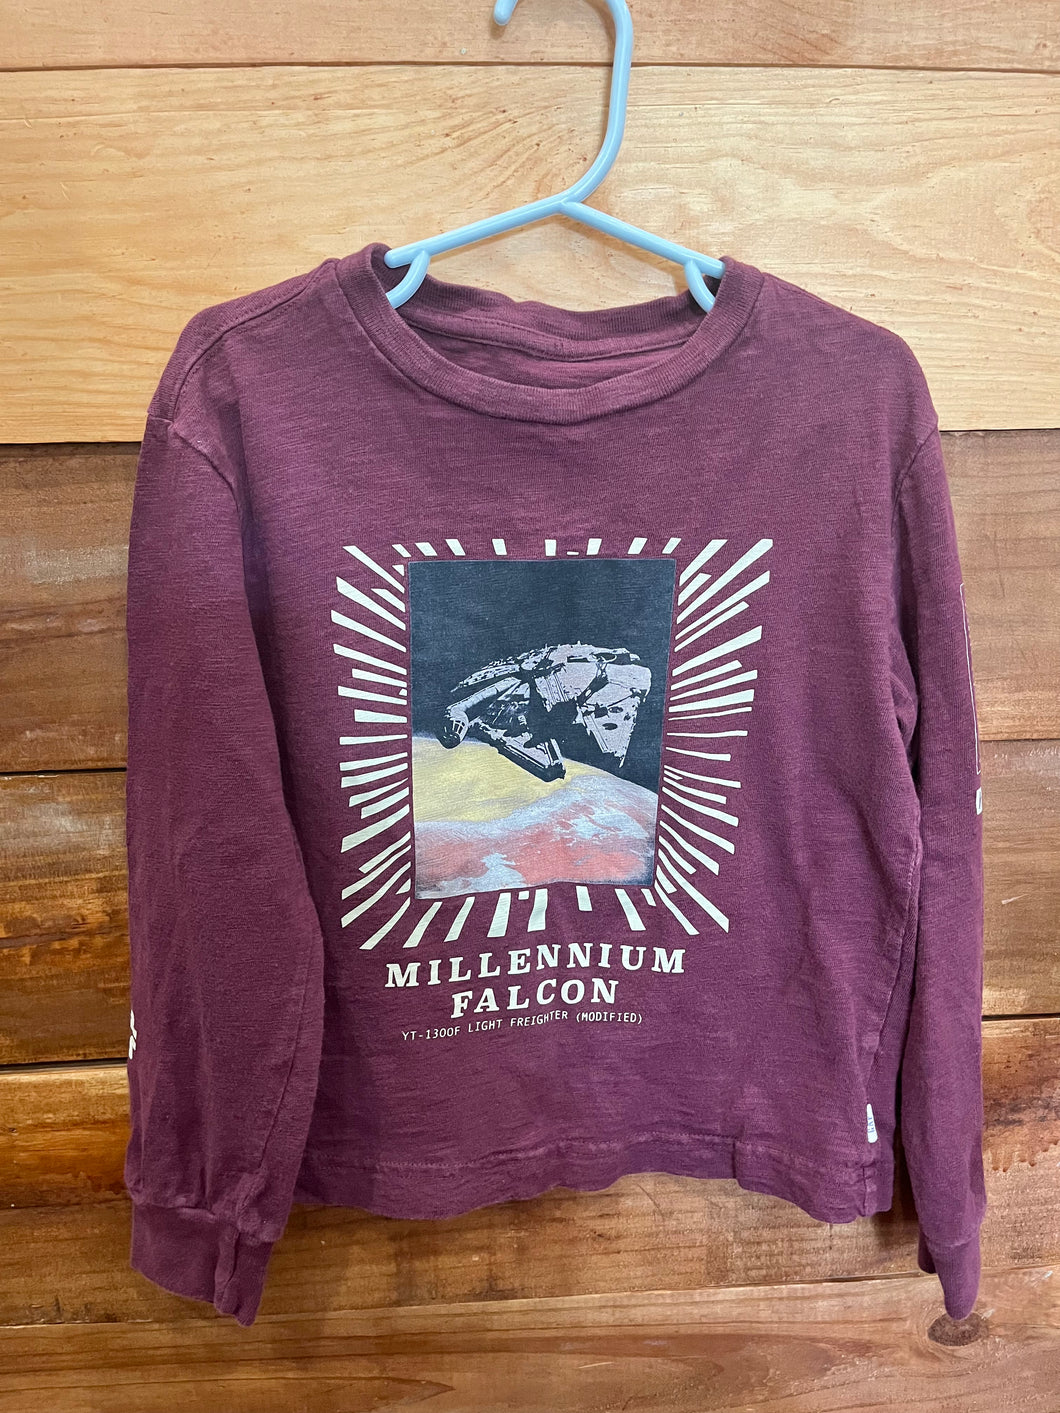 Gap + Star Wars Millennium Falcon Shirt Size 4-5